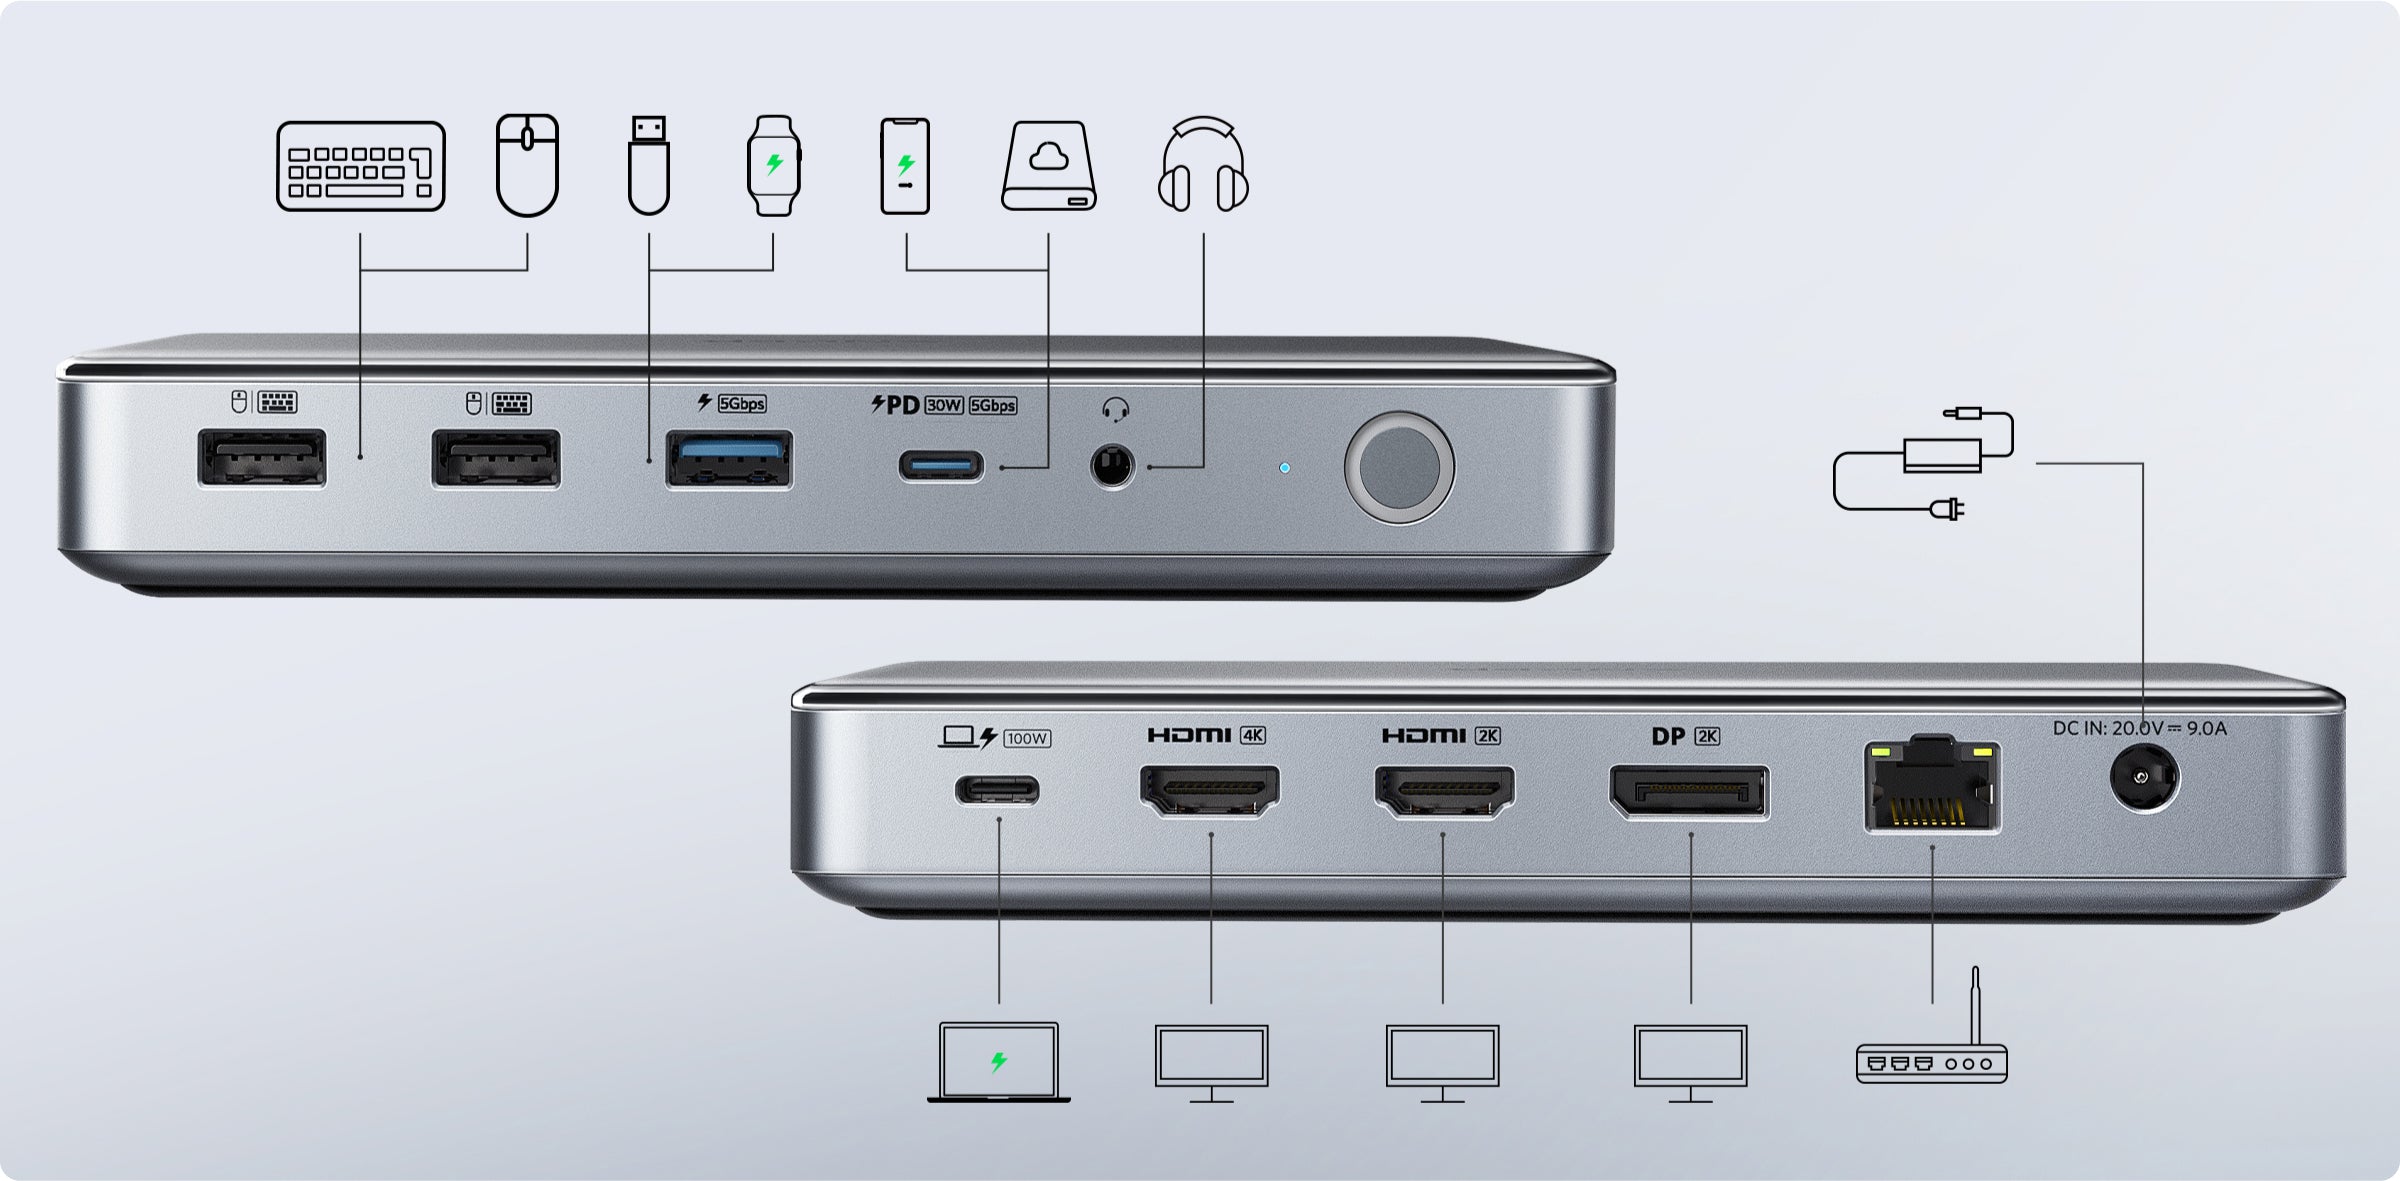 Anker 563 USB-C Docking Station (10-in-1) - Anker US